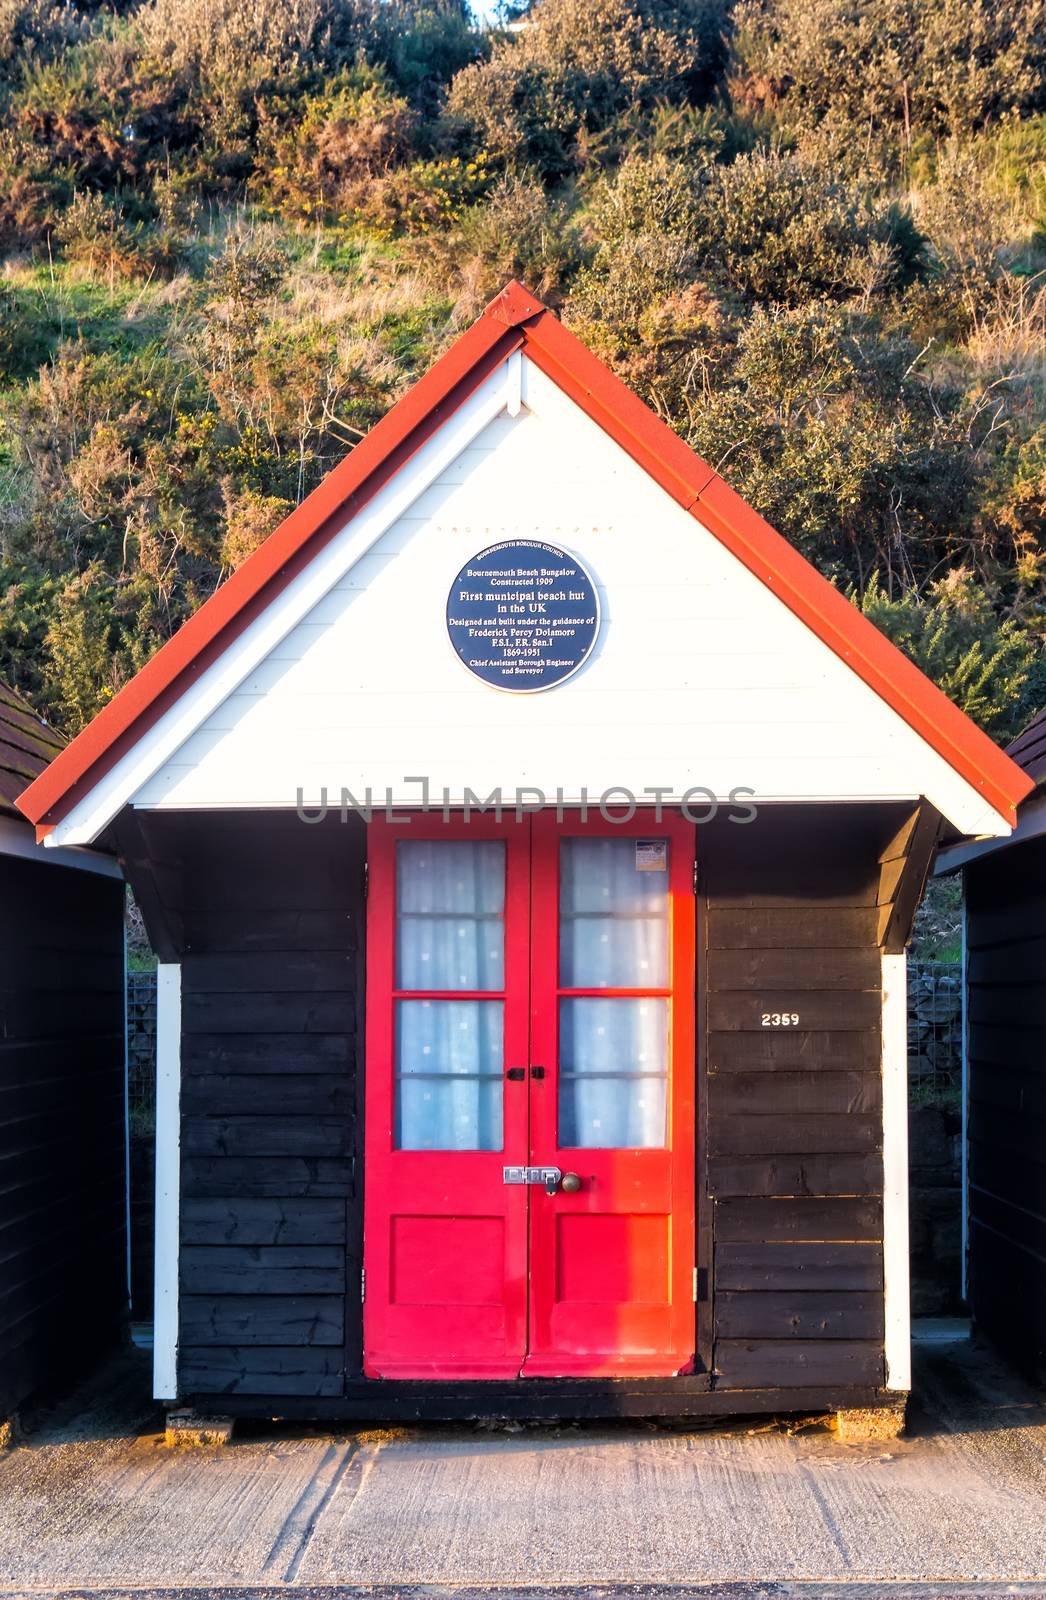 BOURNEMOUTH, UNITED KINGDOM: The first municipal beach hut in the UK by mitakag